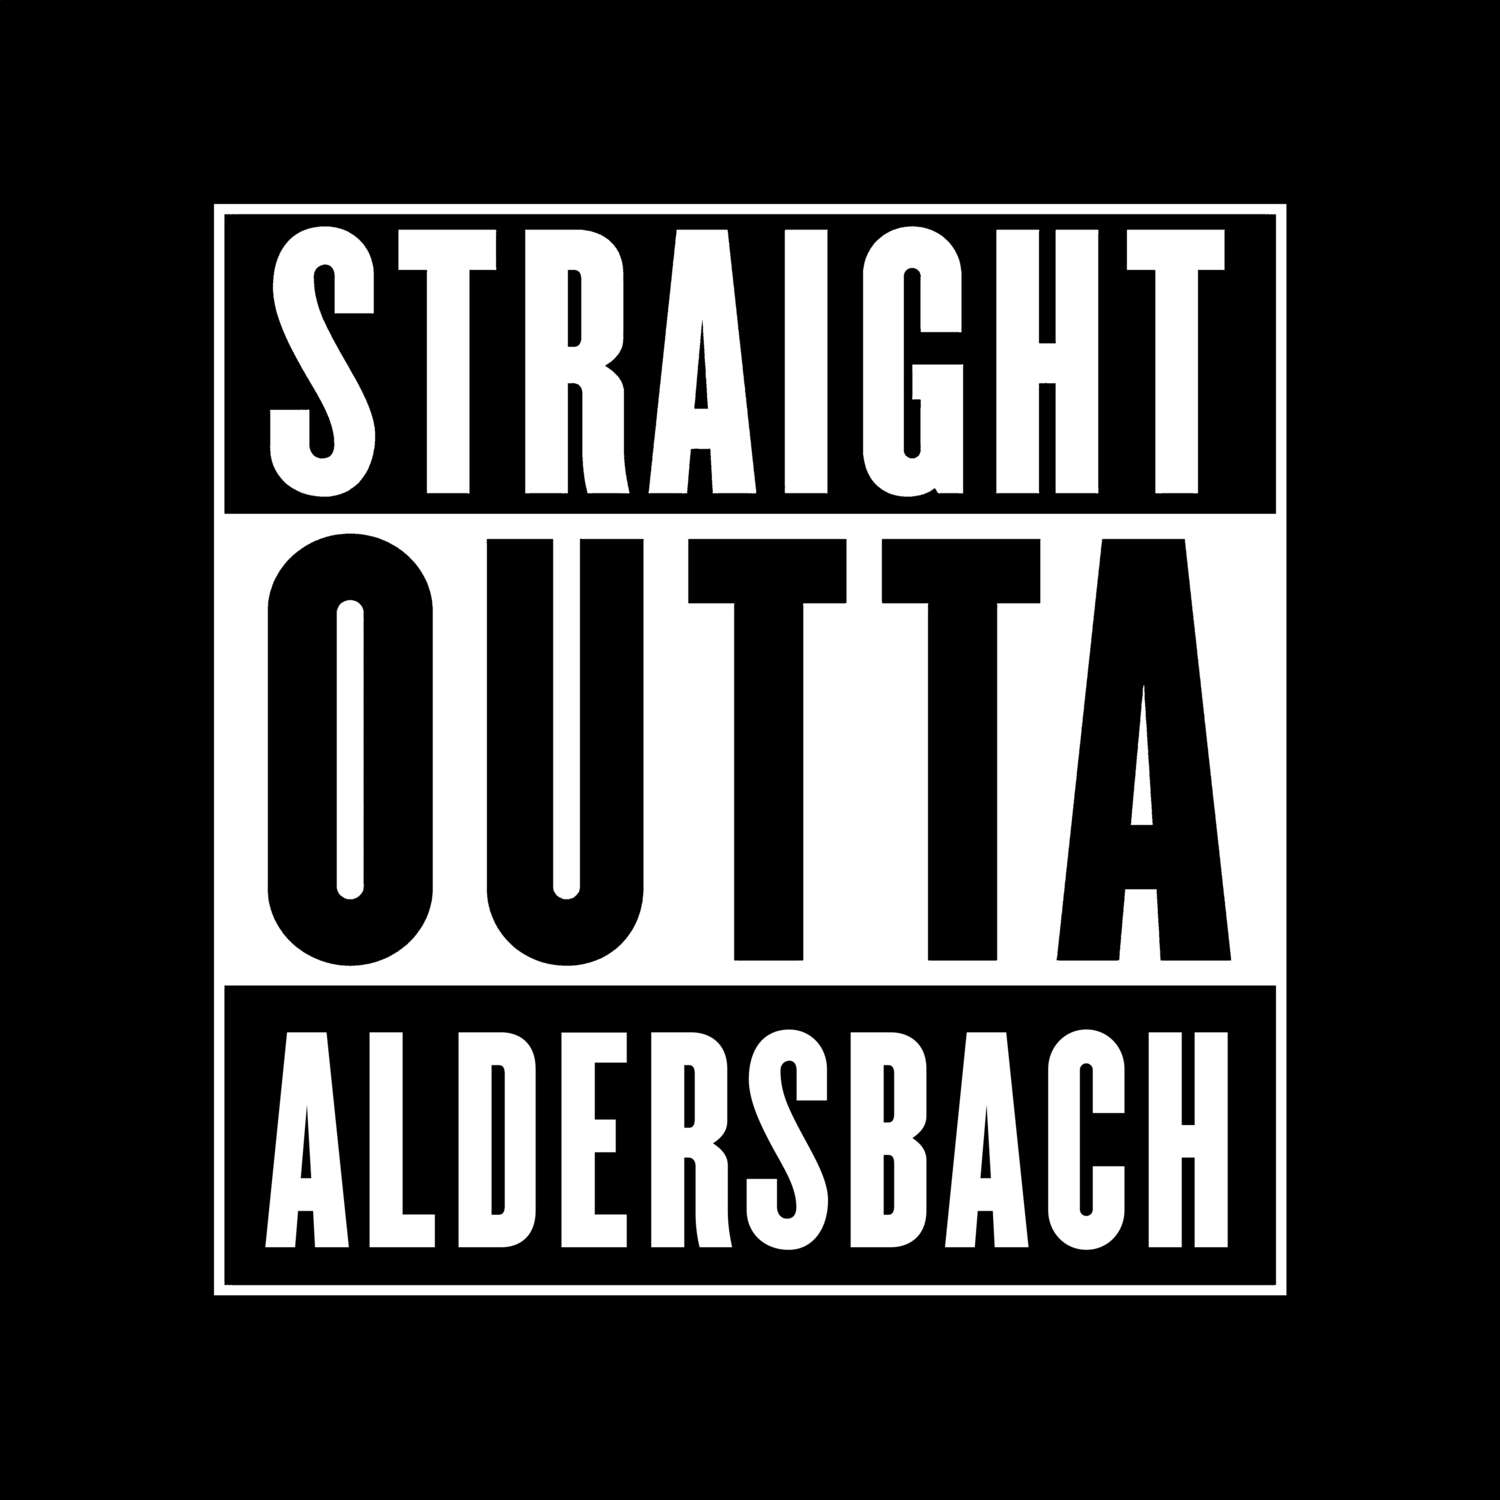 Aldersbach T-Shirt »Straight Outta«